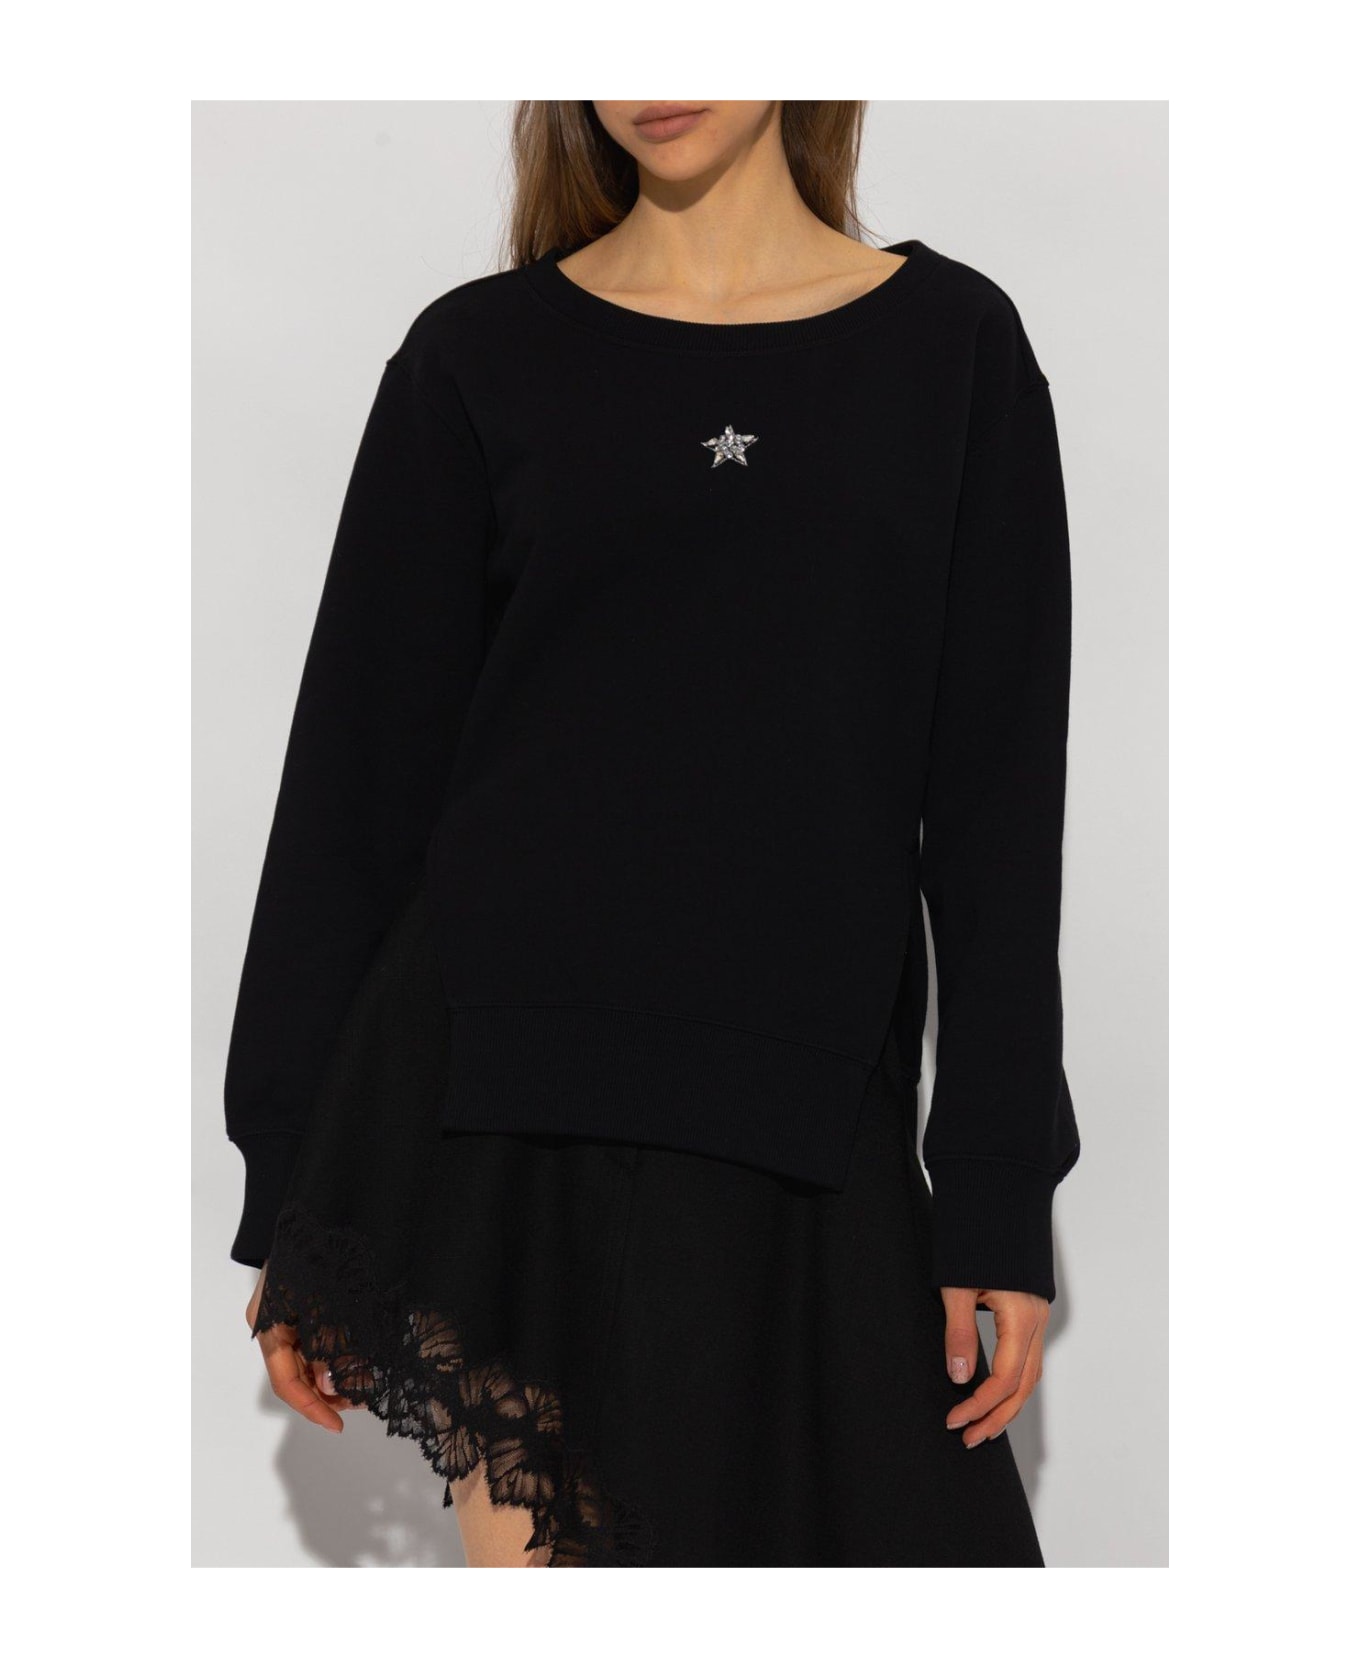 Stella McCartney Appliqued Sweatshirt - Black